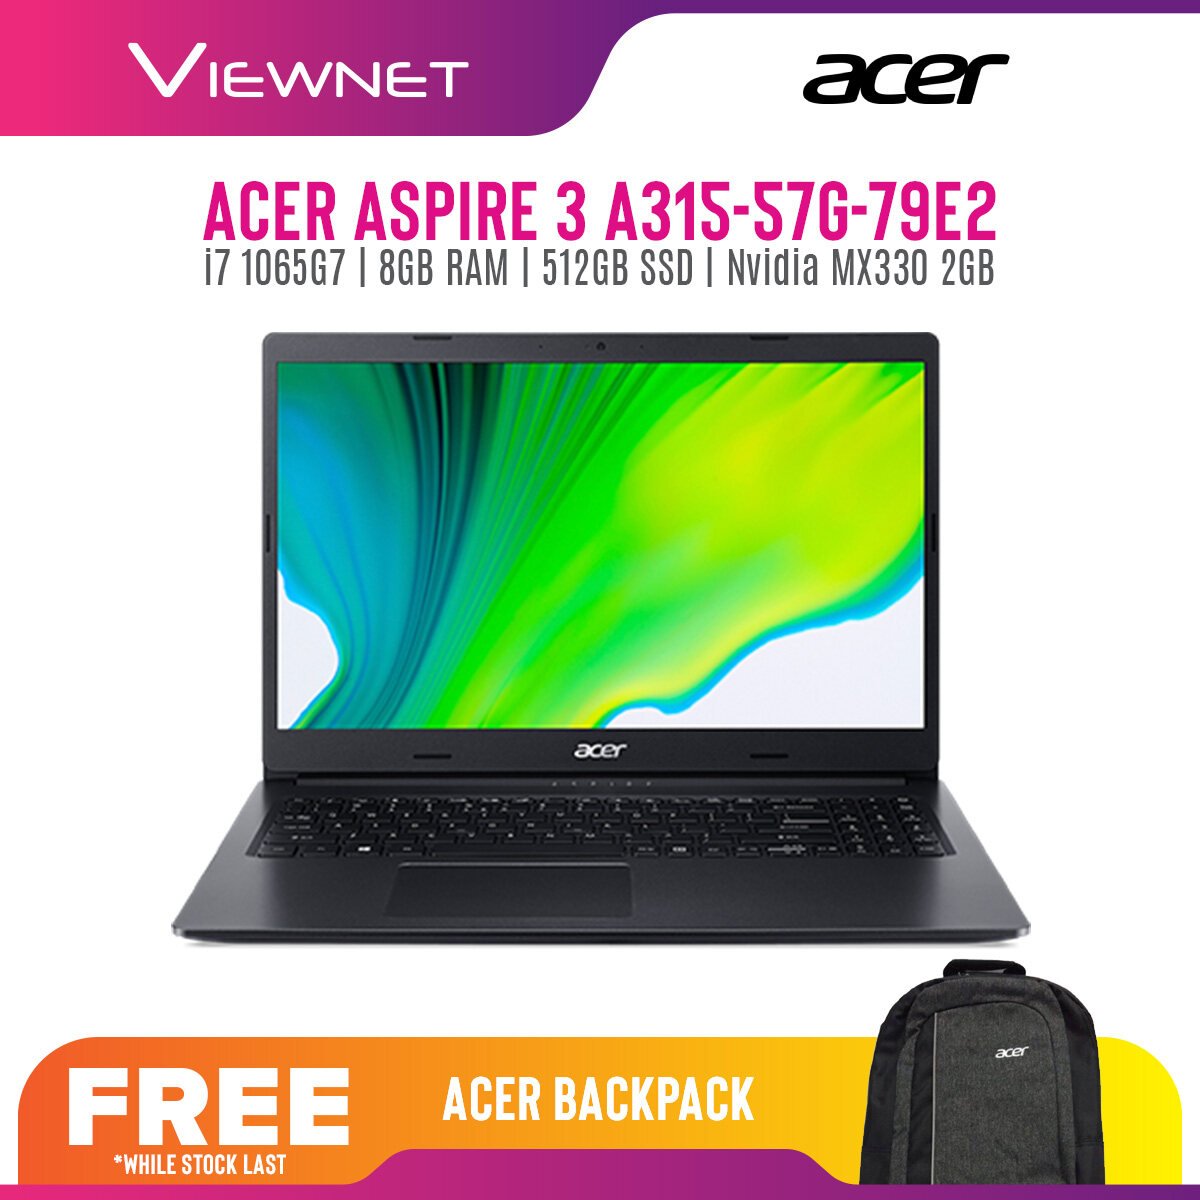 ACER ASPIRE 3 A315-57G-79E2 LAPTOP INTEL CORE I7 1065G7 8GB DDR4 512GB SSD MX330 2GB 15.6